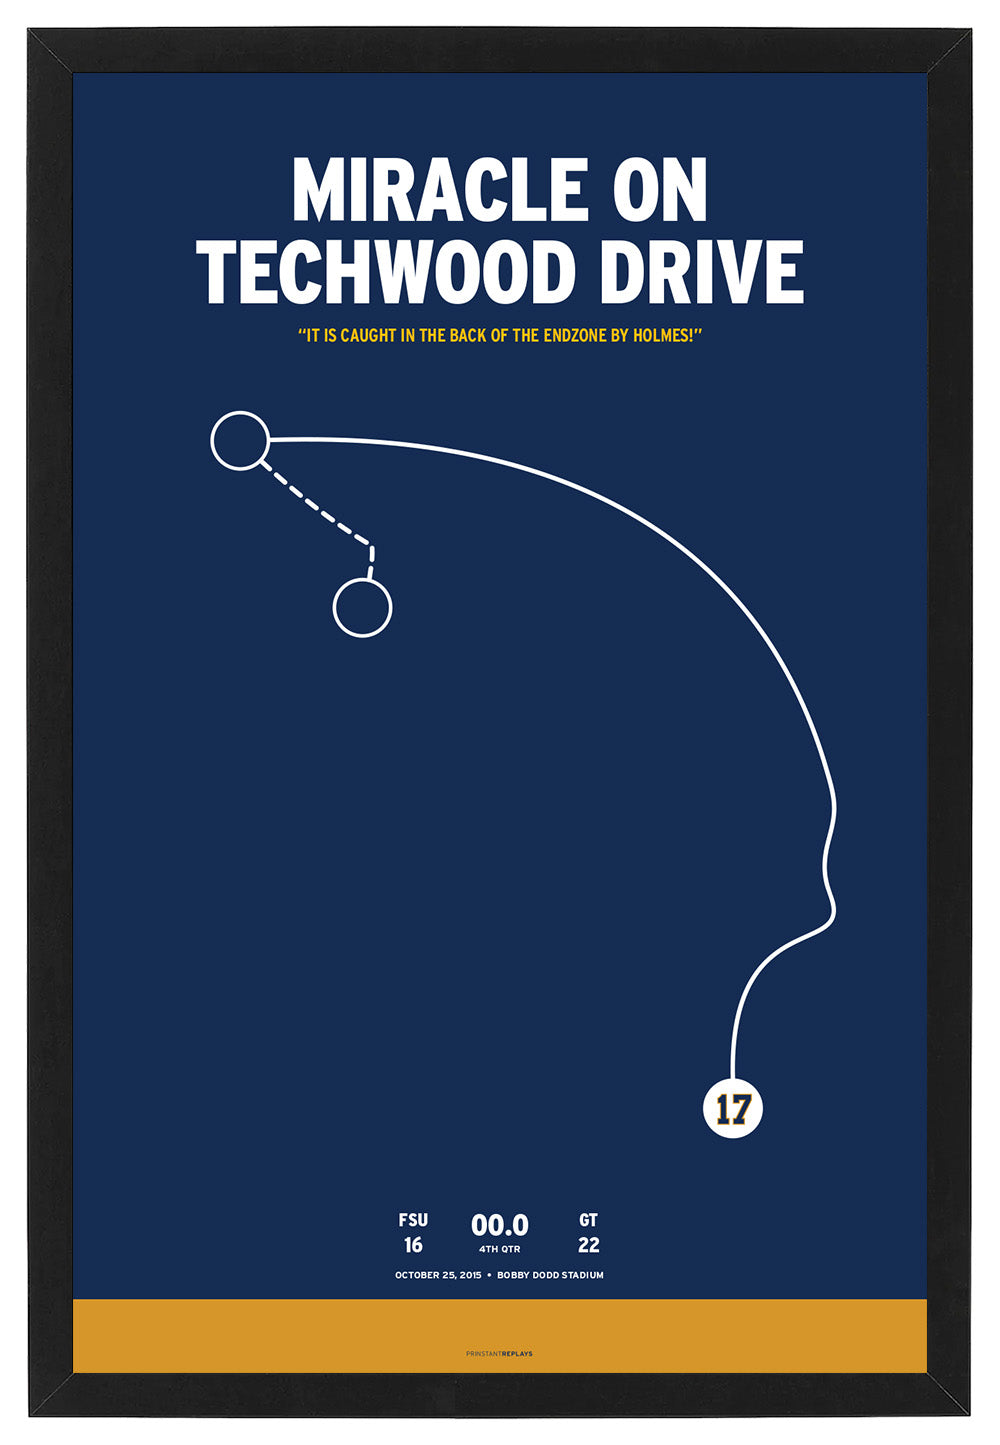 Georgia Tech Miracle on Techwood Drive Framed Print